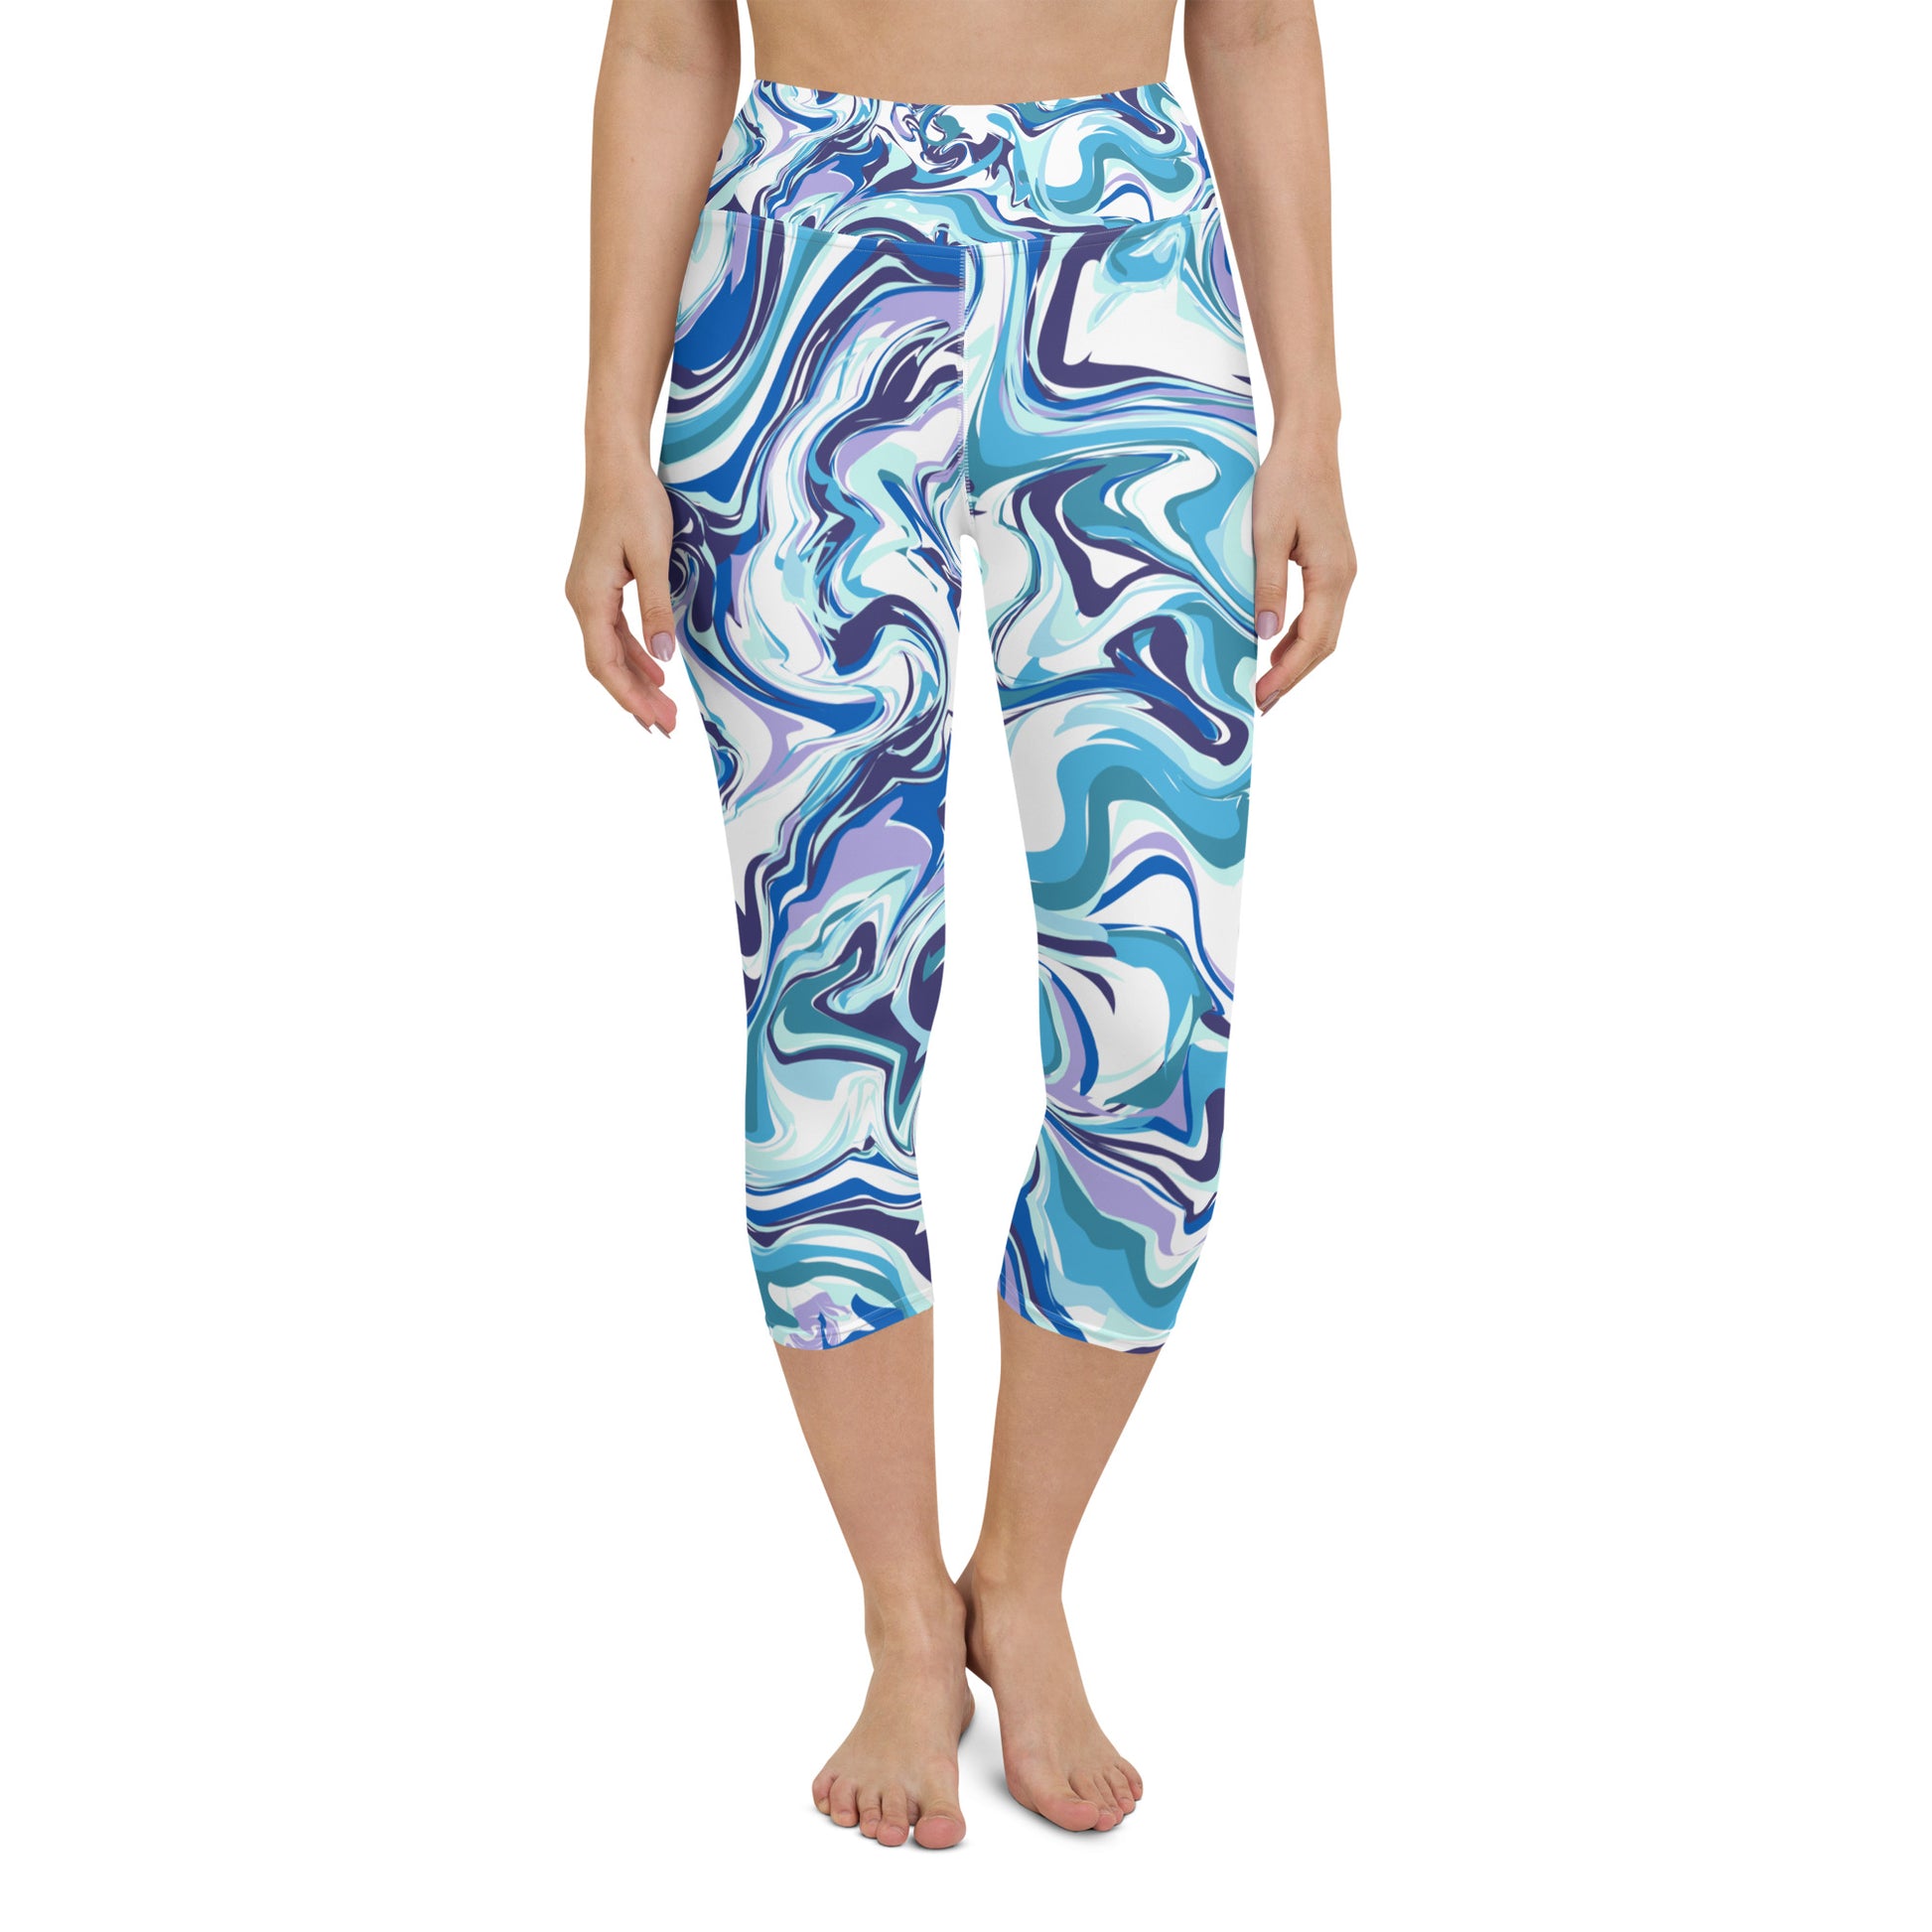 Yoga Capri Leggings - women's, comfortable, stretchy, high wasted